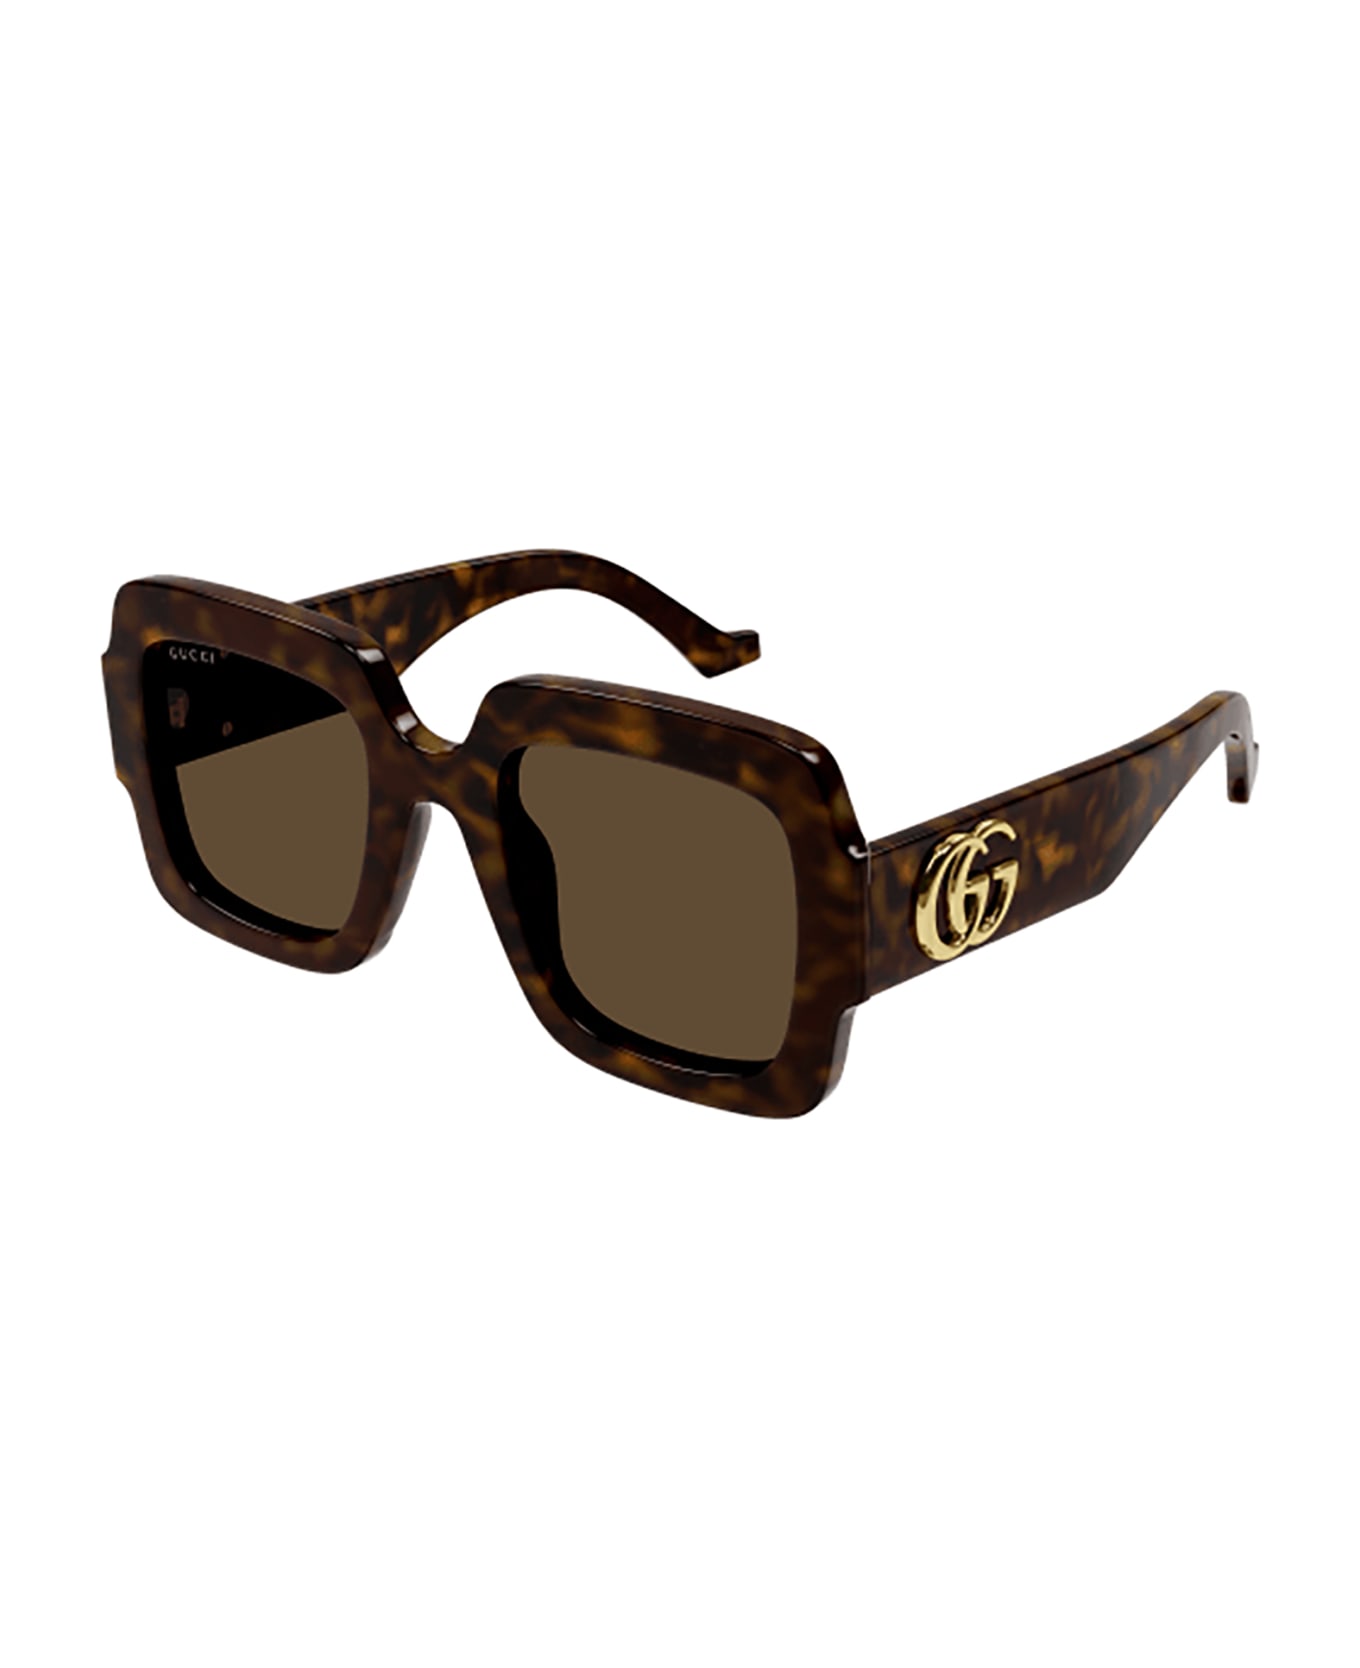 Gucci Eyewear GG1547S Sunglasses - Havana Havana Brown